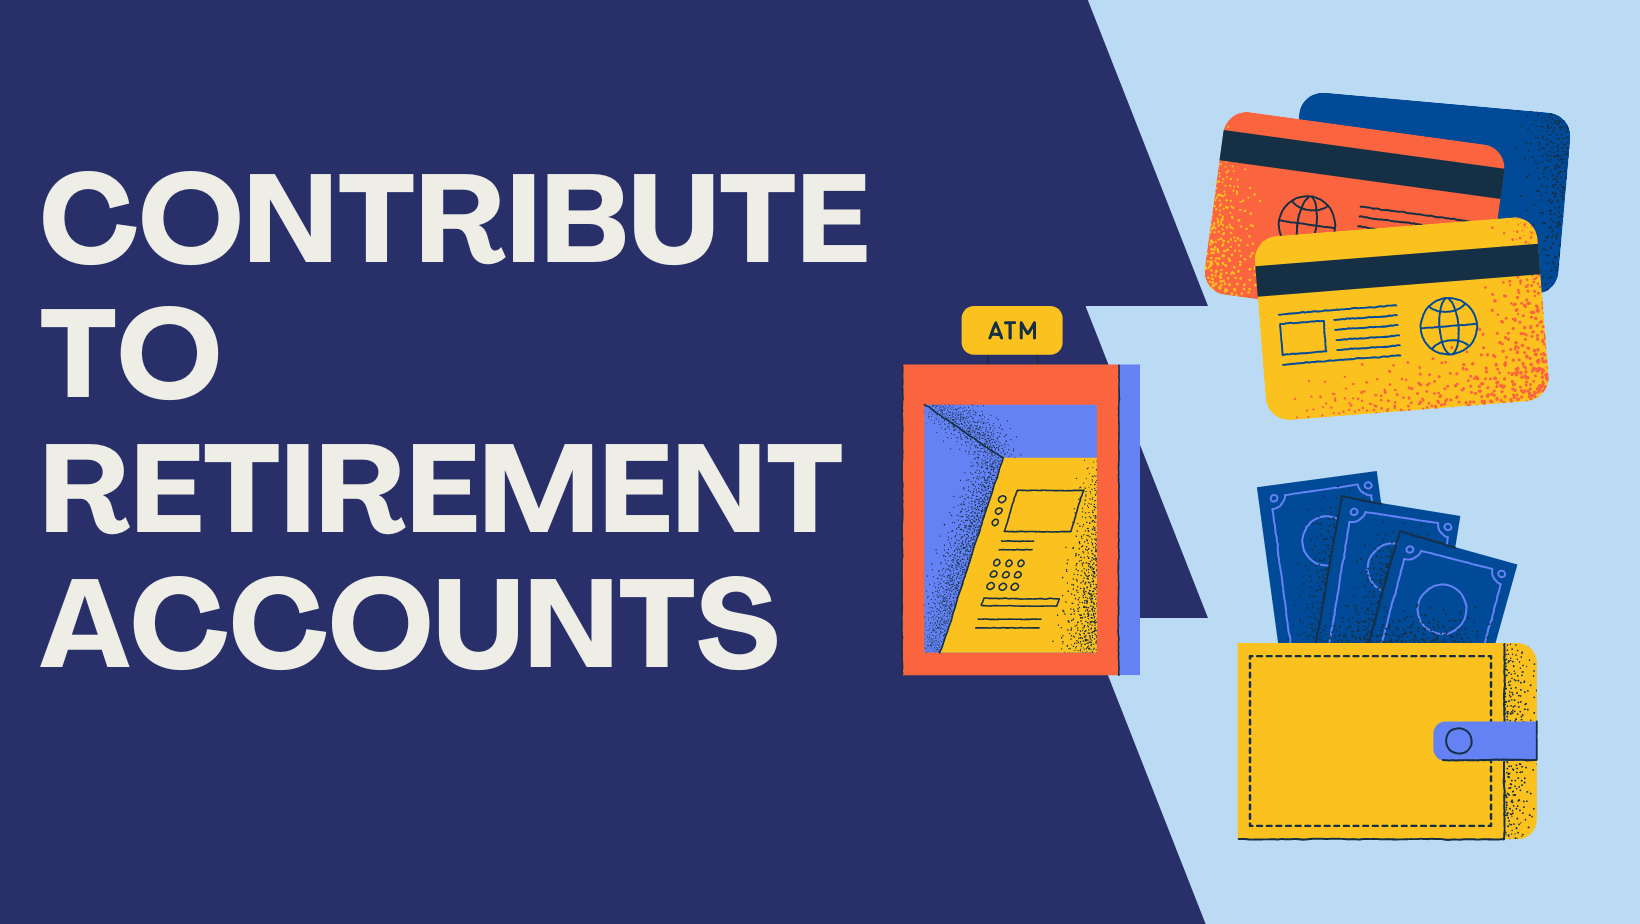 Contribute to retirement accounts